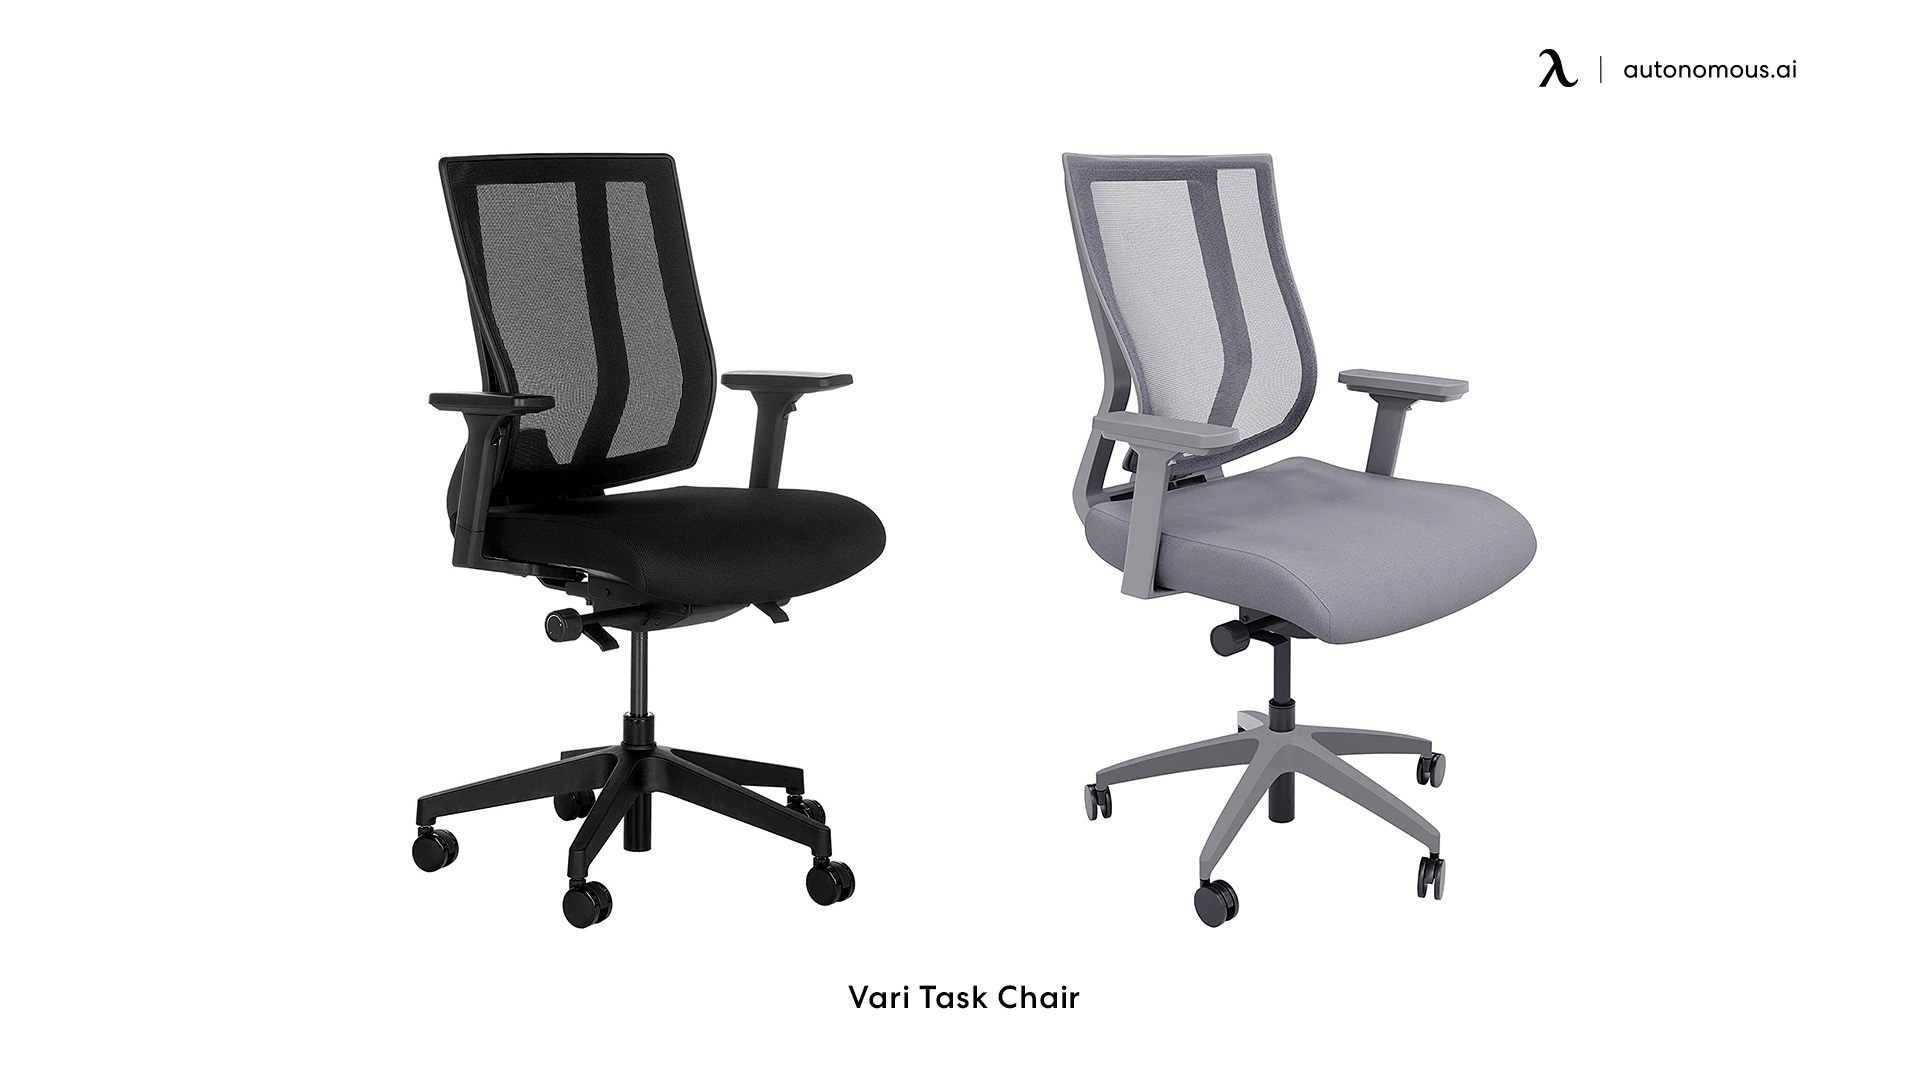 Vari Task Chair